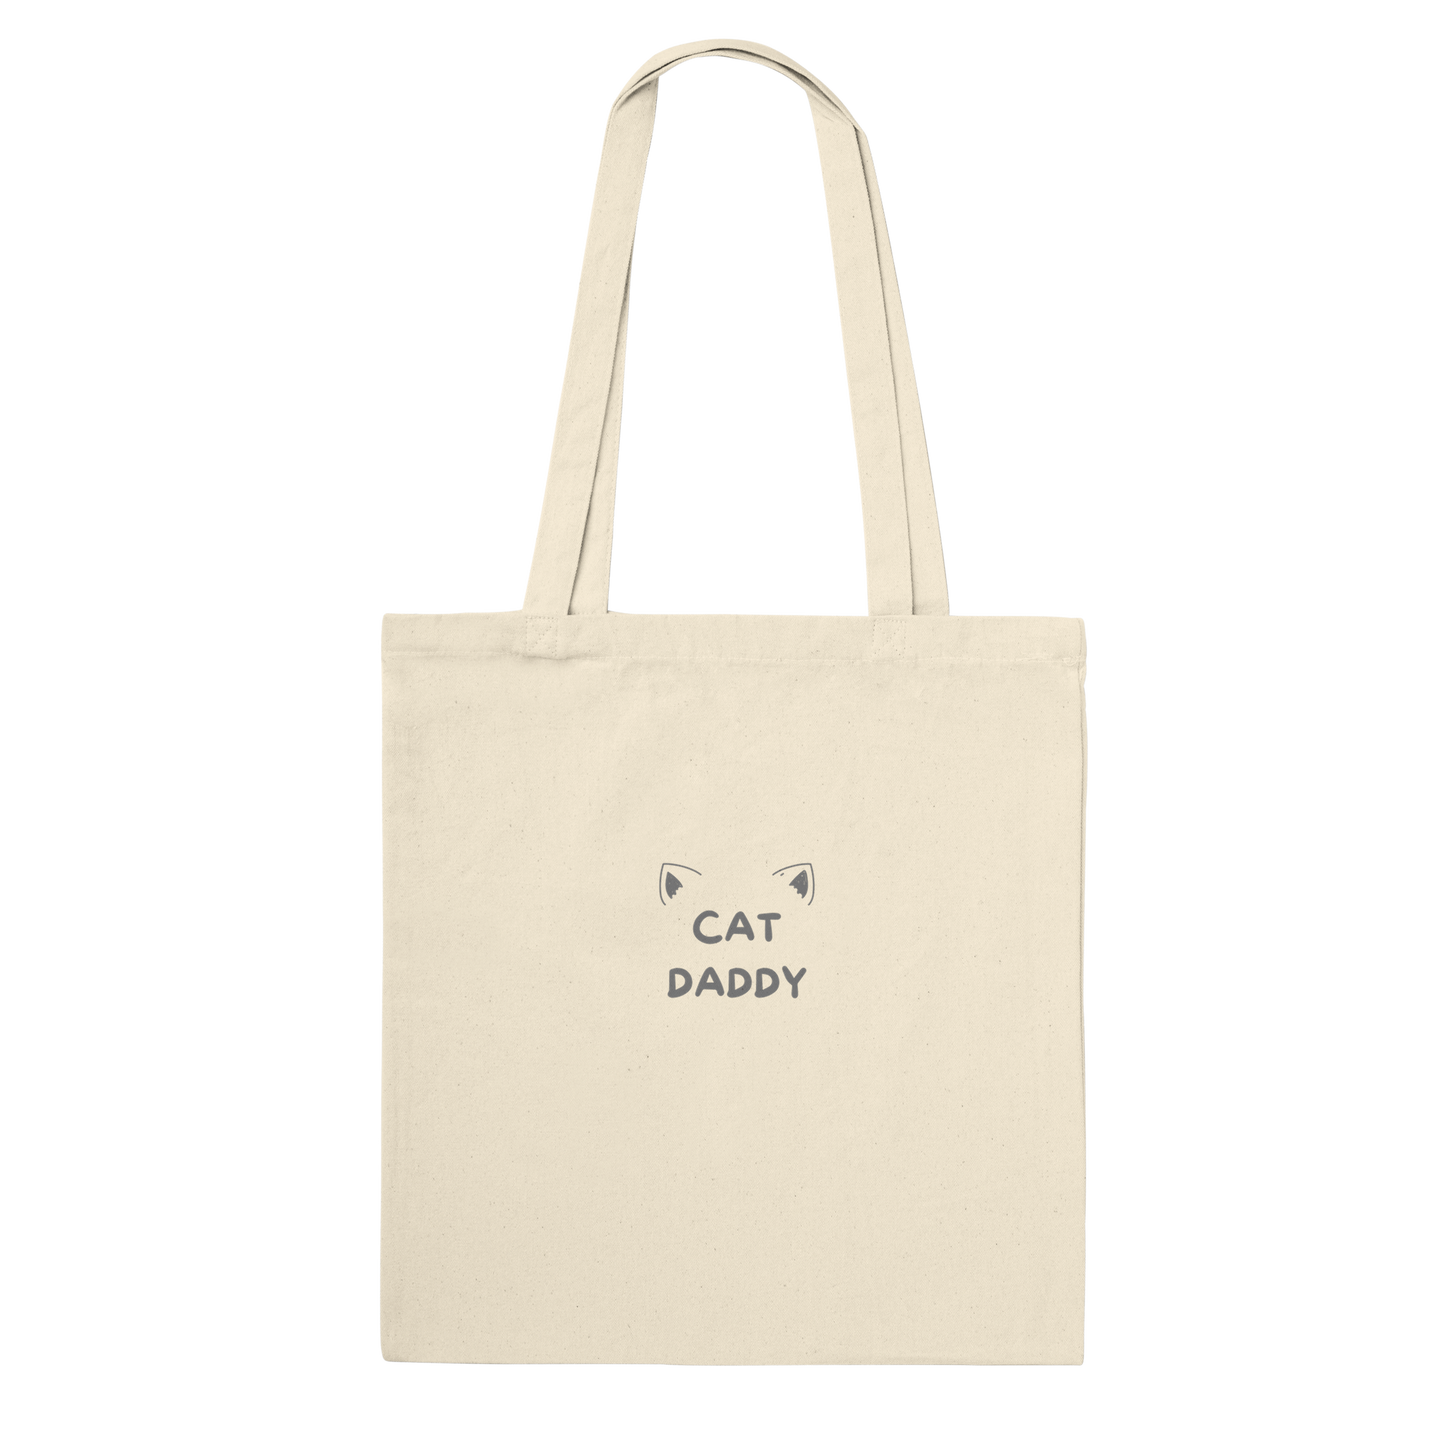 Cat daddy Classic Tote Bag